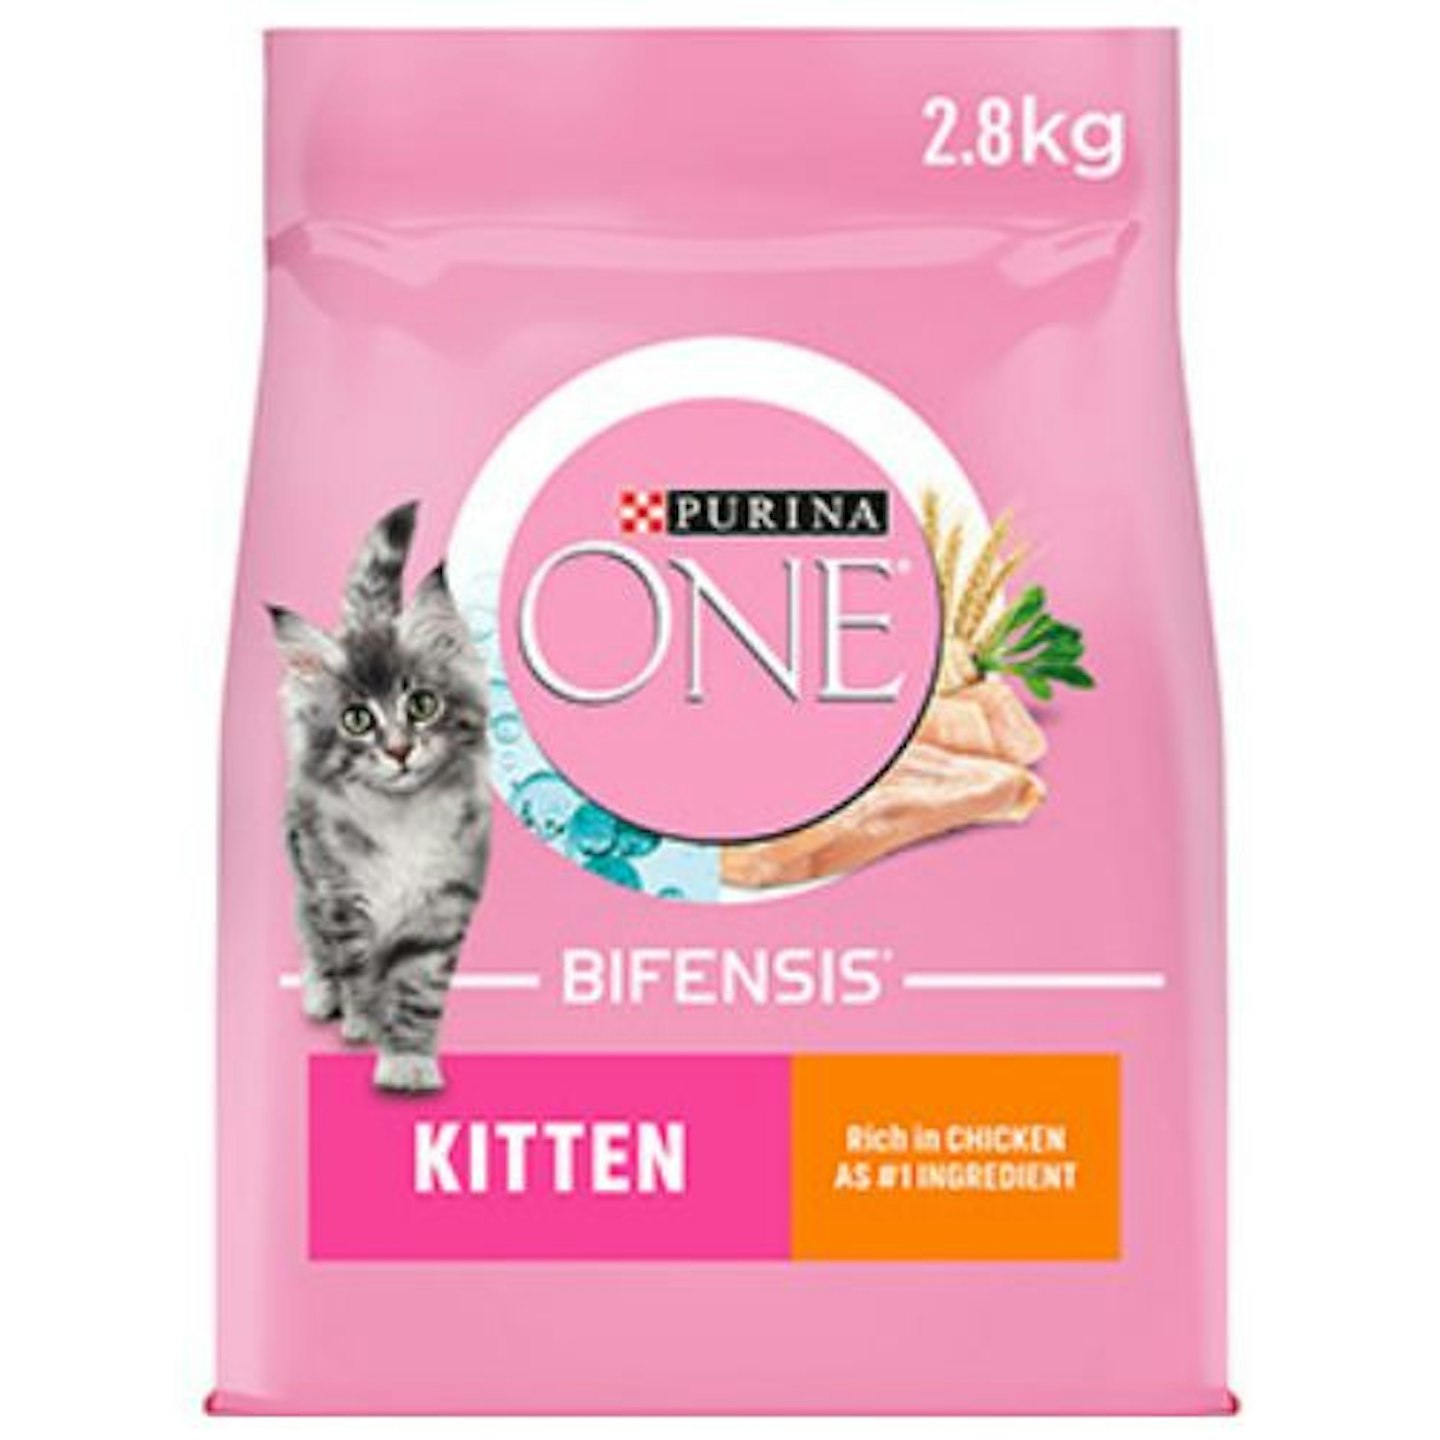 Purina ONE Kitten Dry Cat Food